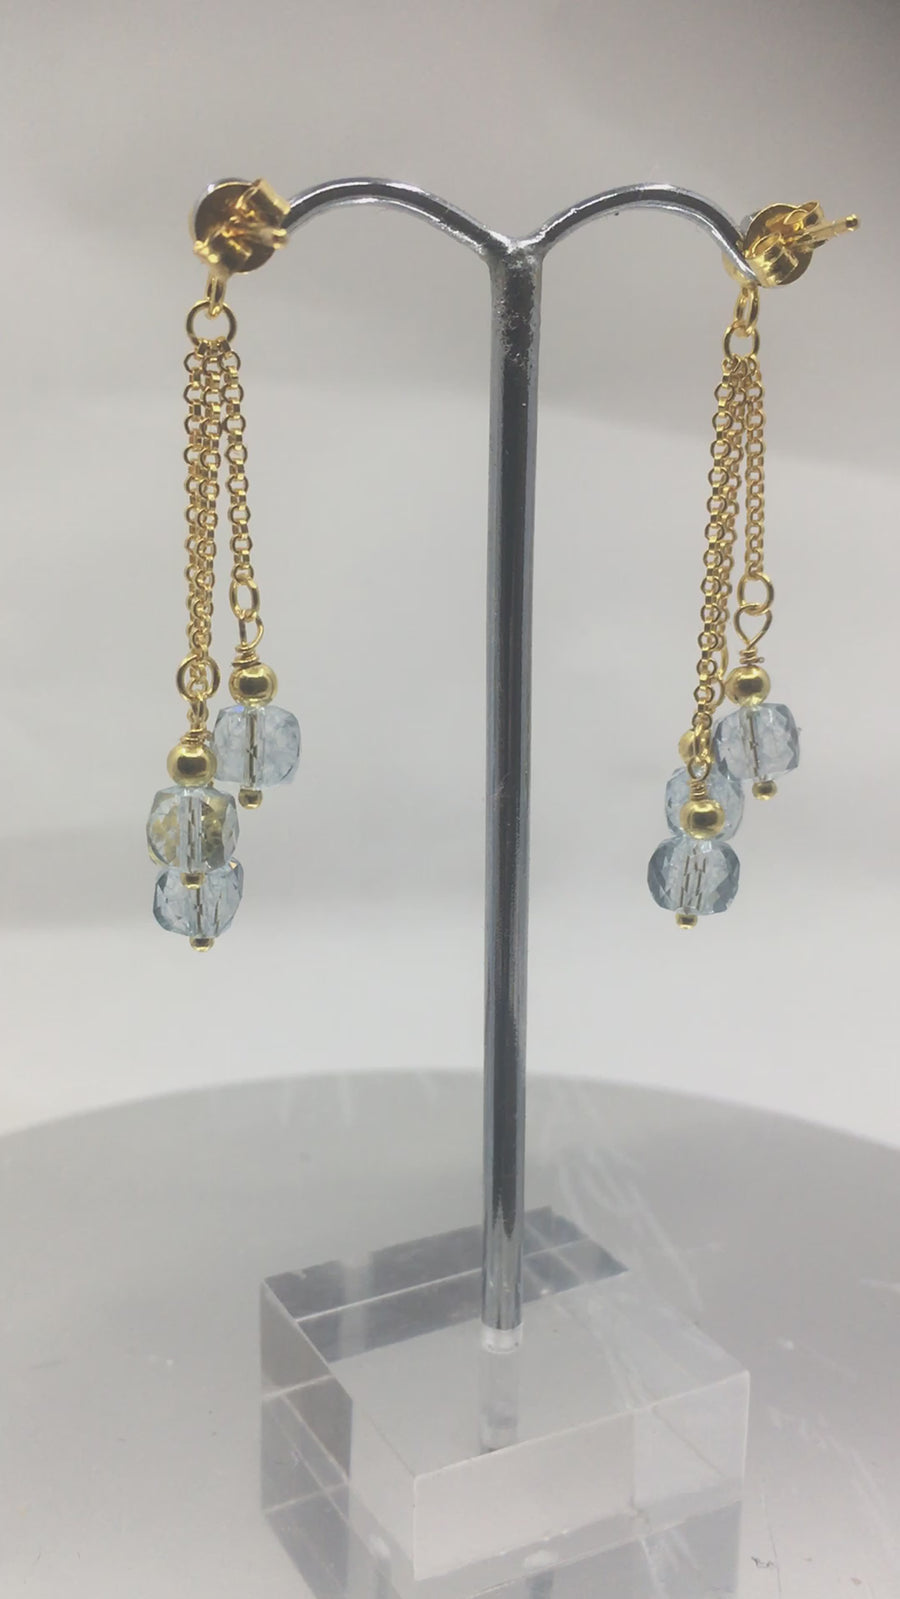 Sky blue topaz waterfall earrings with three cubes per earring measuring 4mm